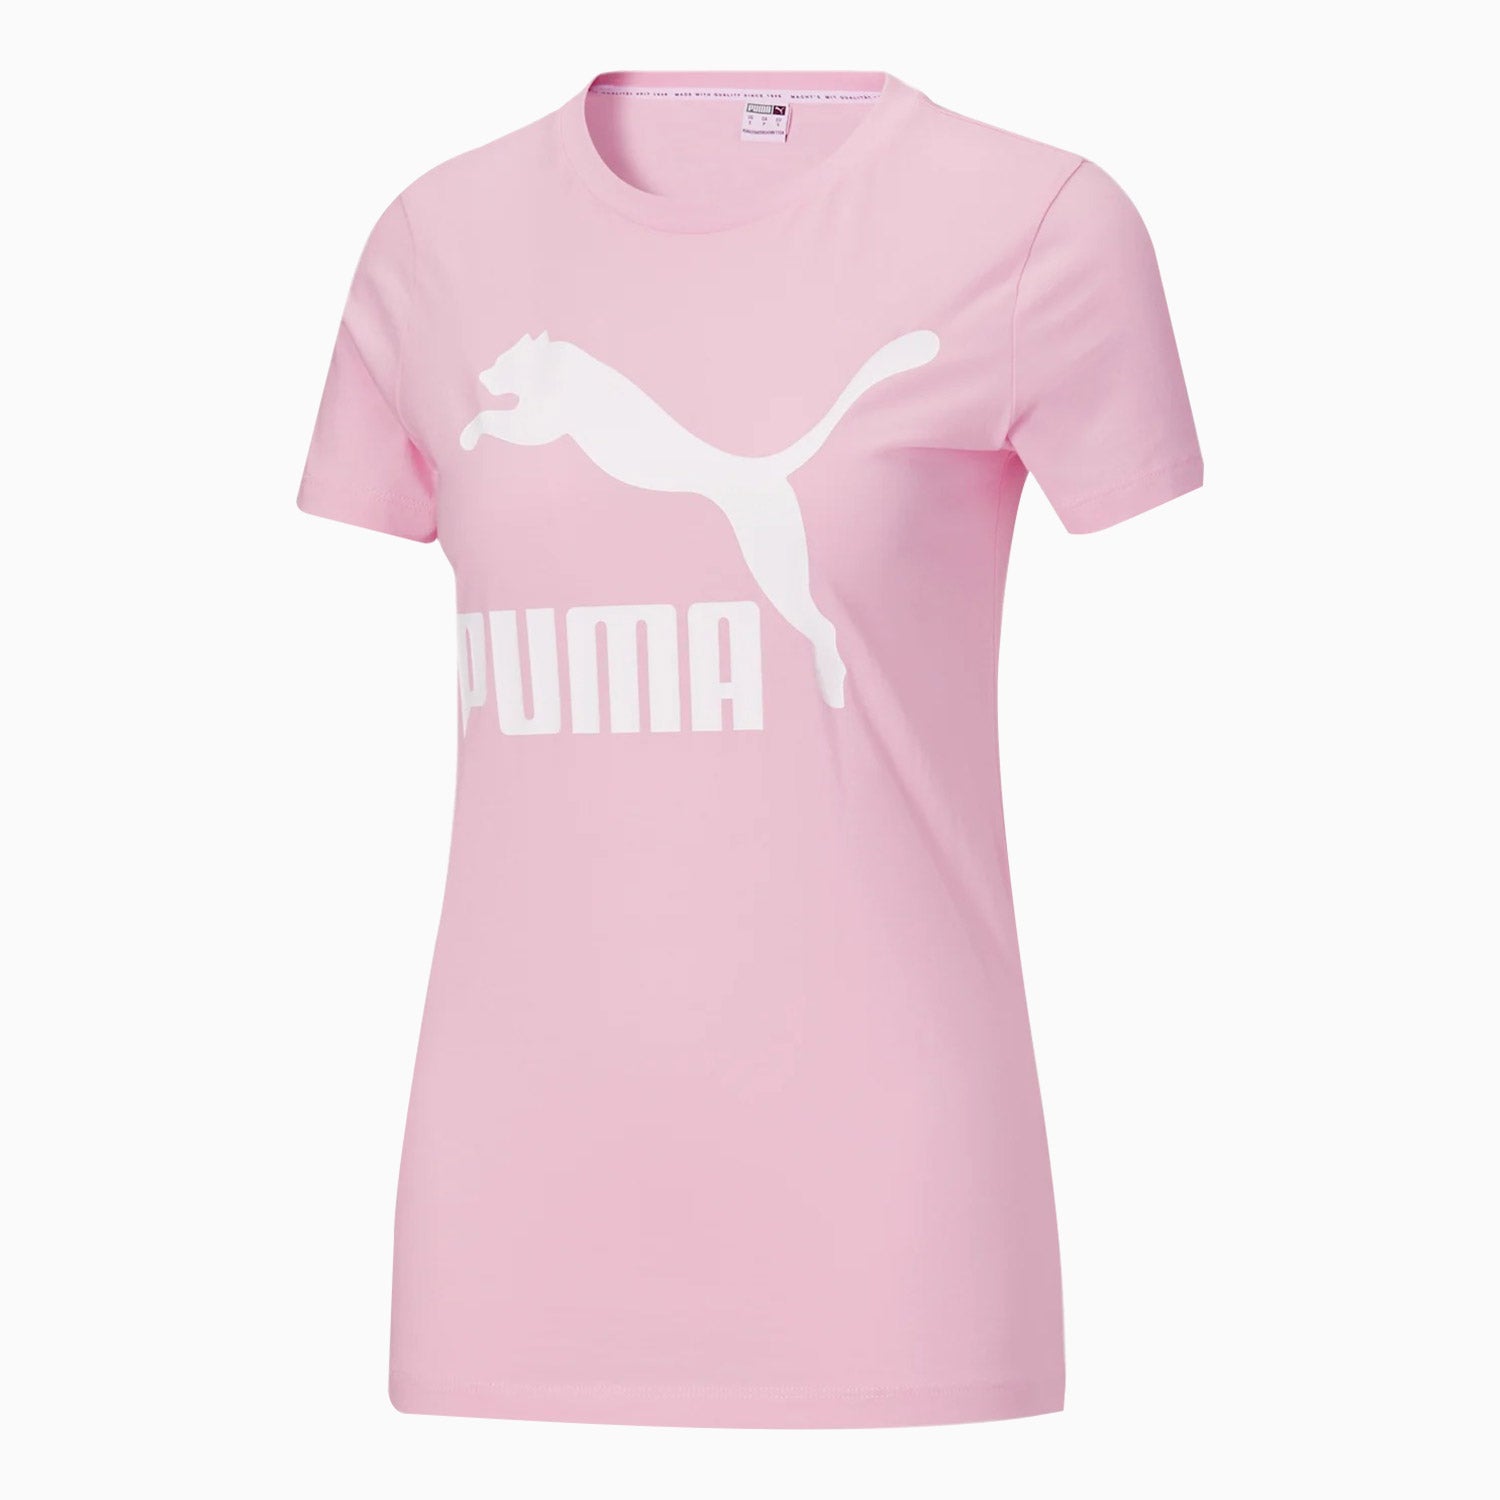 puma-womens-classic-logo-t-shirt-530077-10